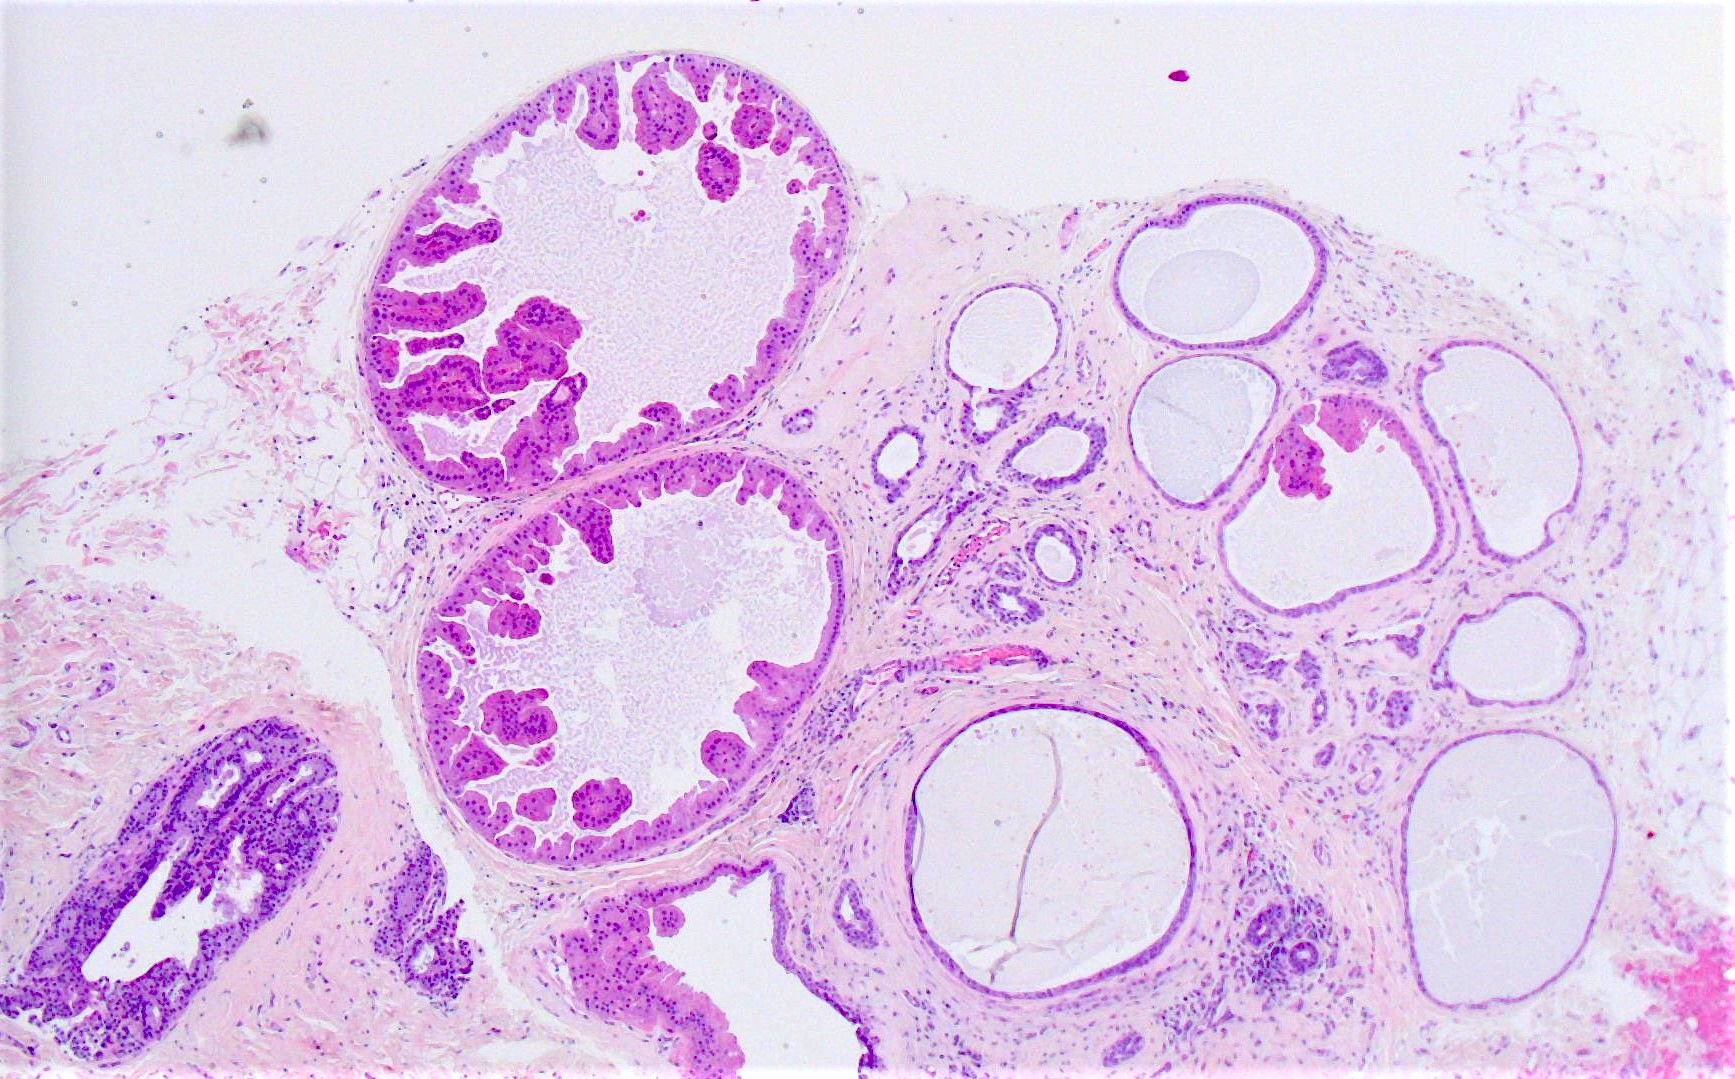 Papillary lesion with apocrine metaplasia - Papilloma with apocrine metaplasia